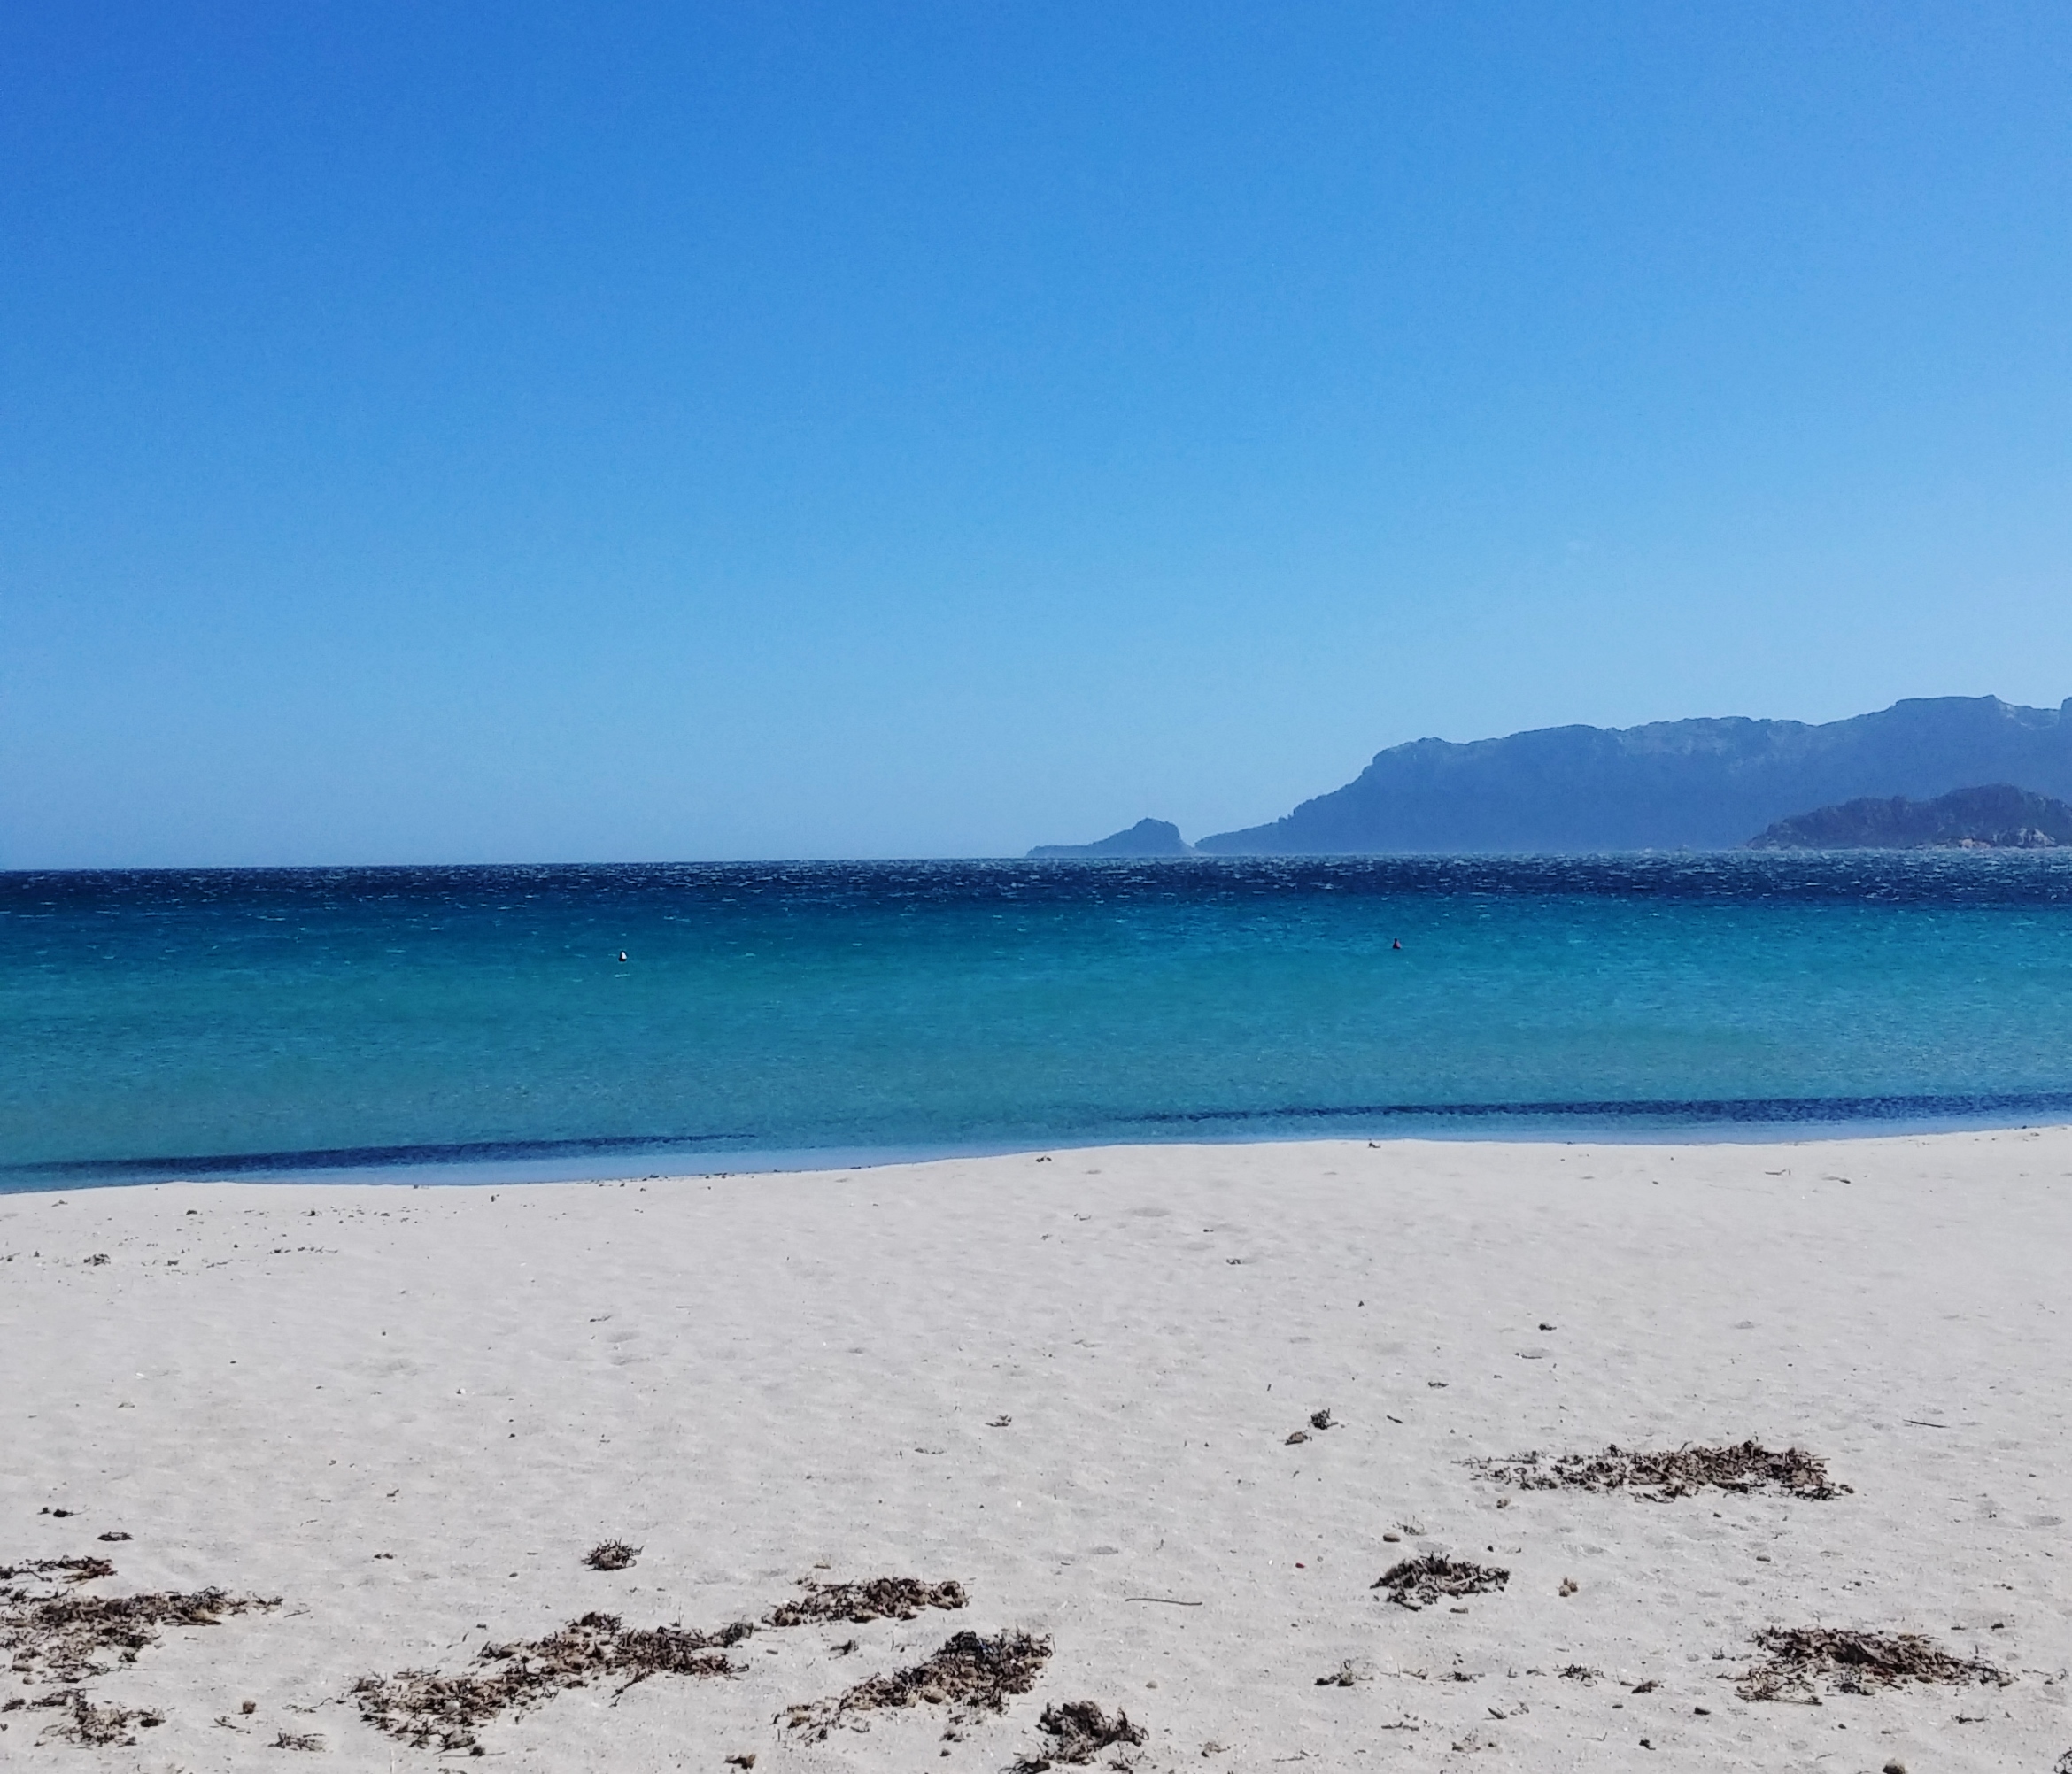 Sardegna riparte: da oggi spiagge aperte!